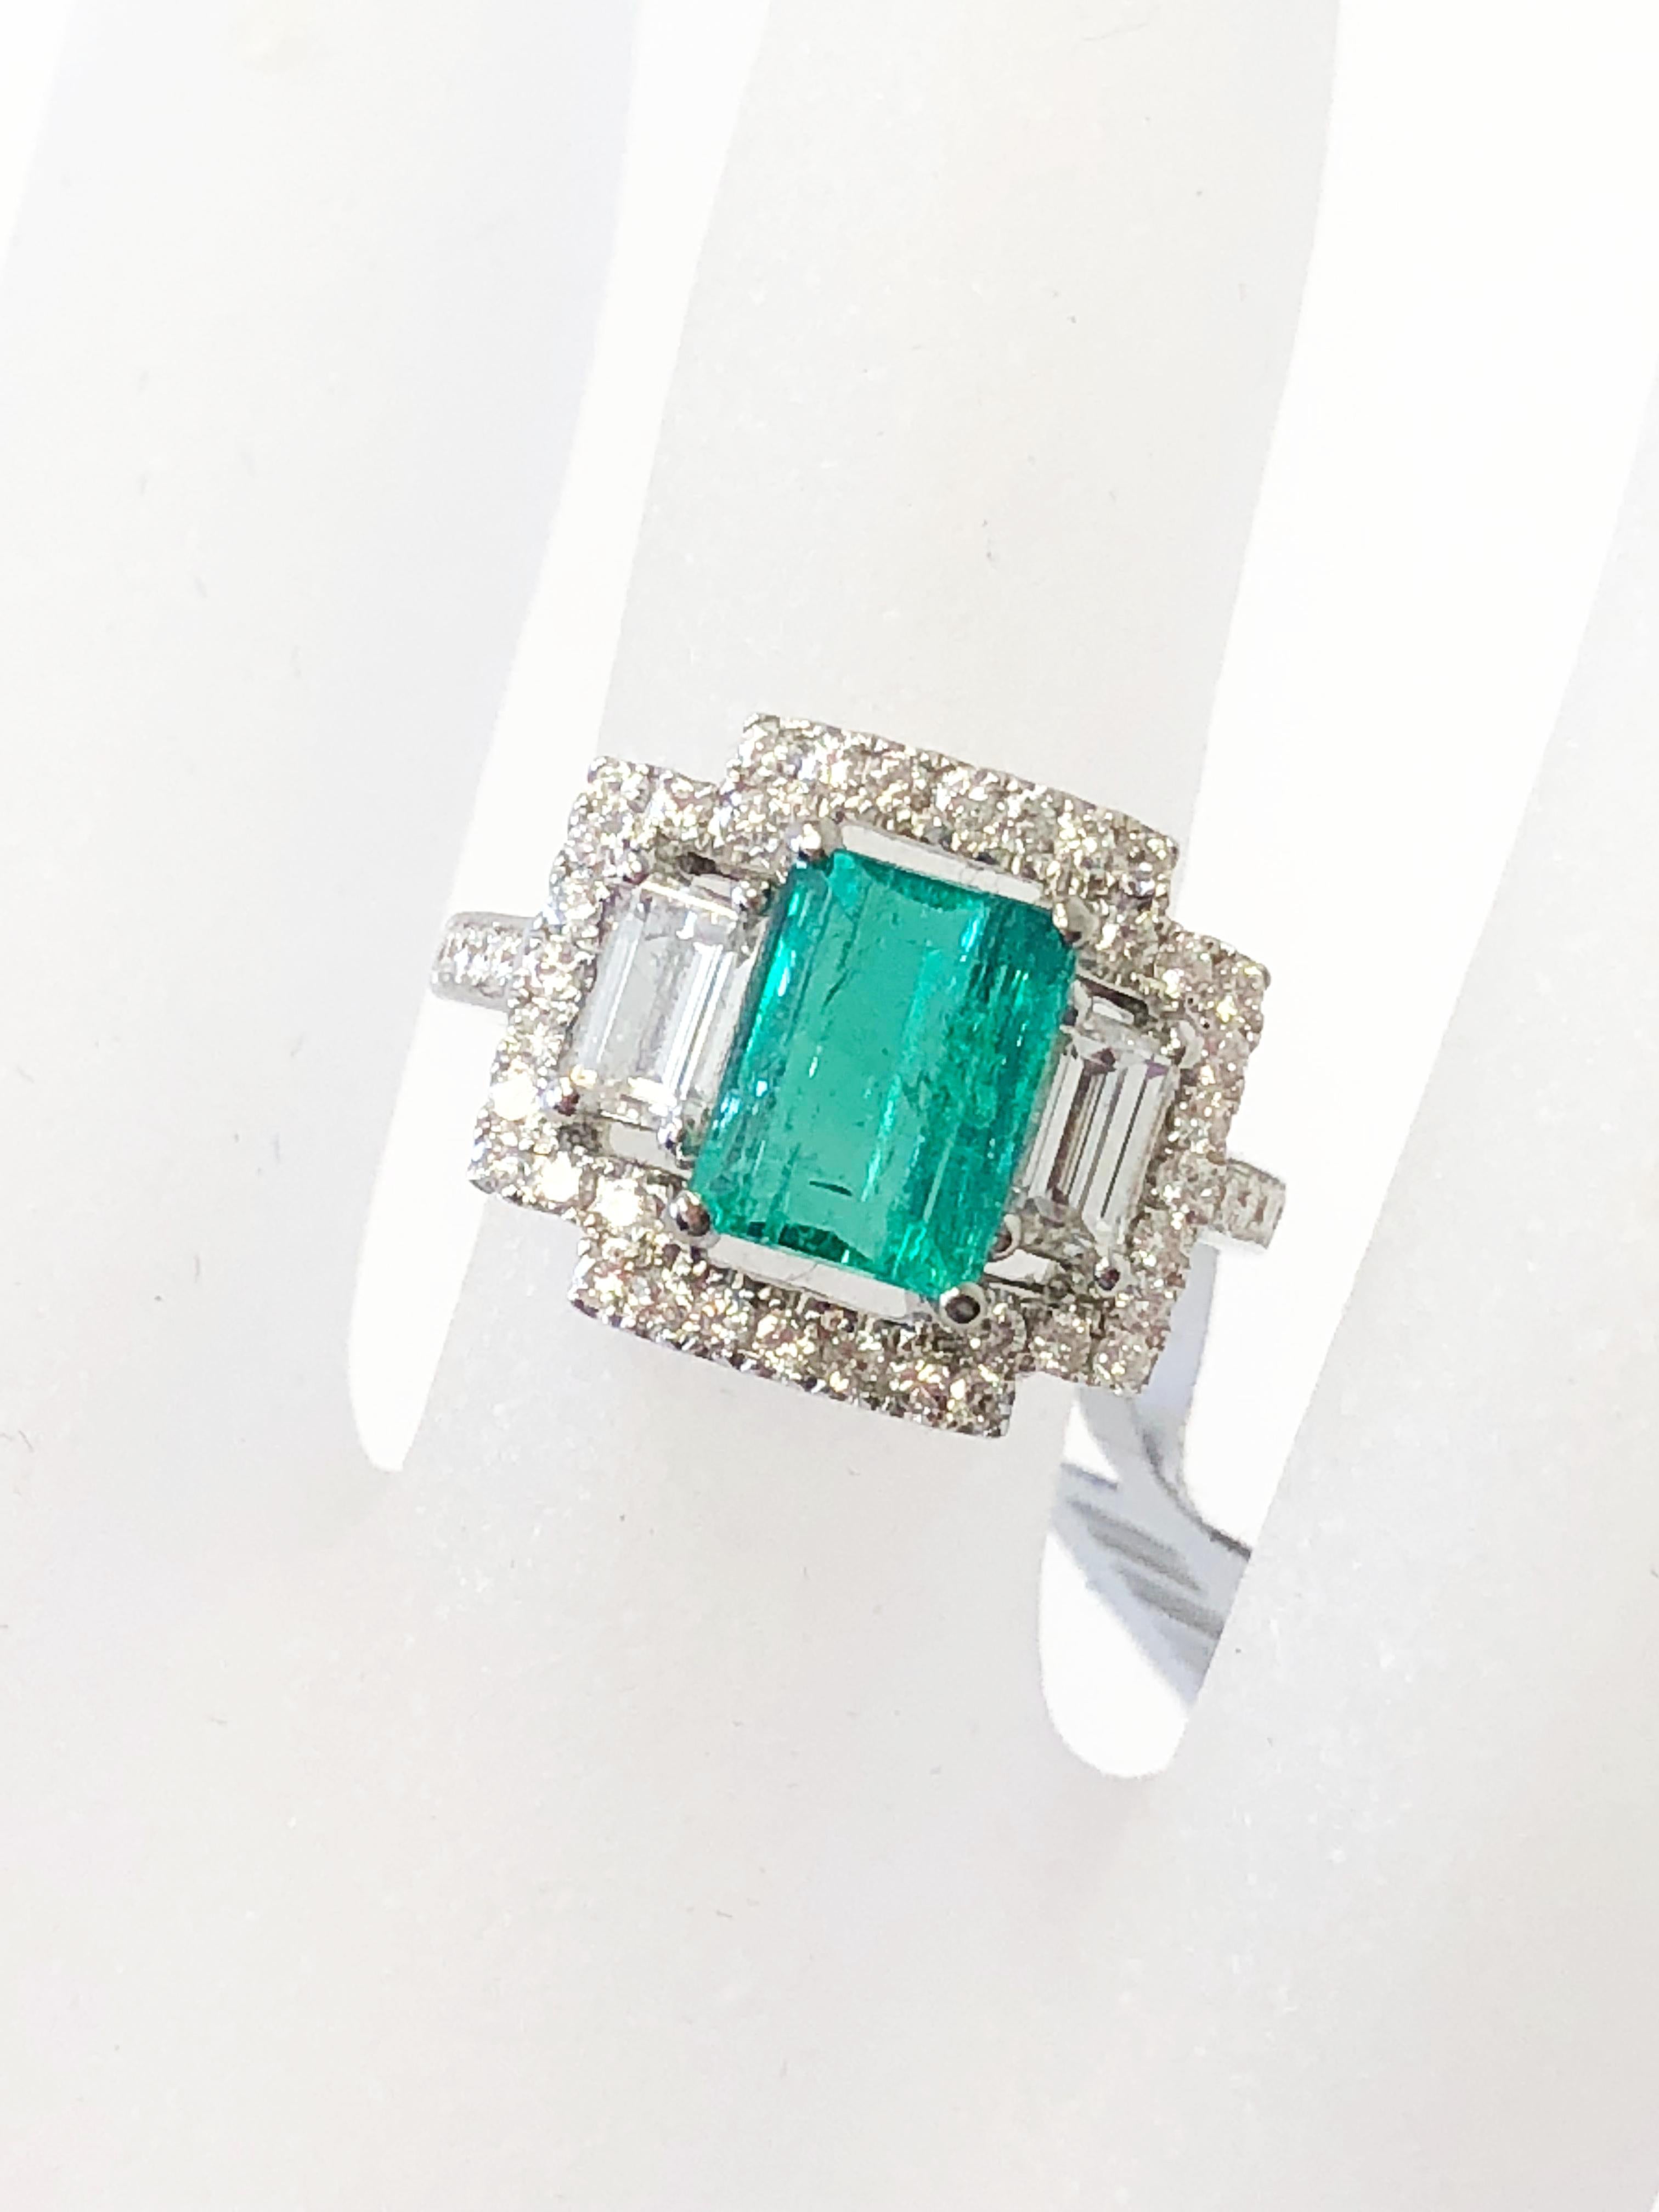 Emerald Cut Emerald and White Diamond Ring in 18 Karat White Gold